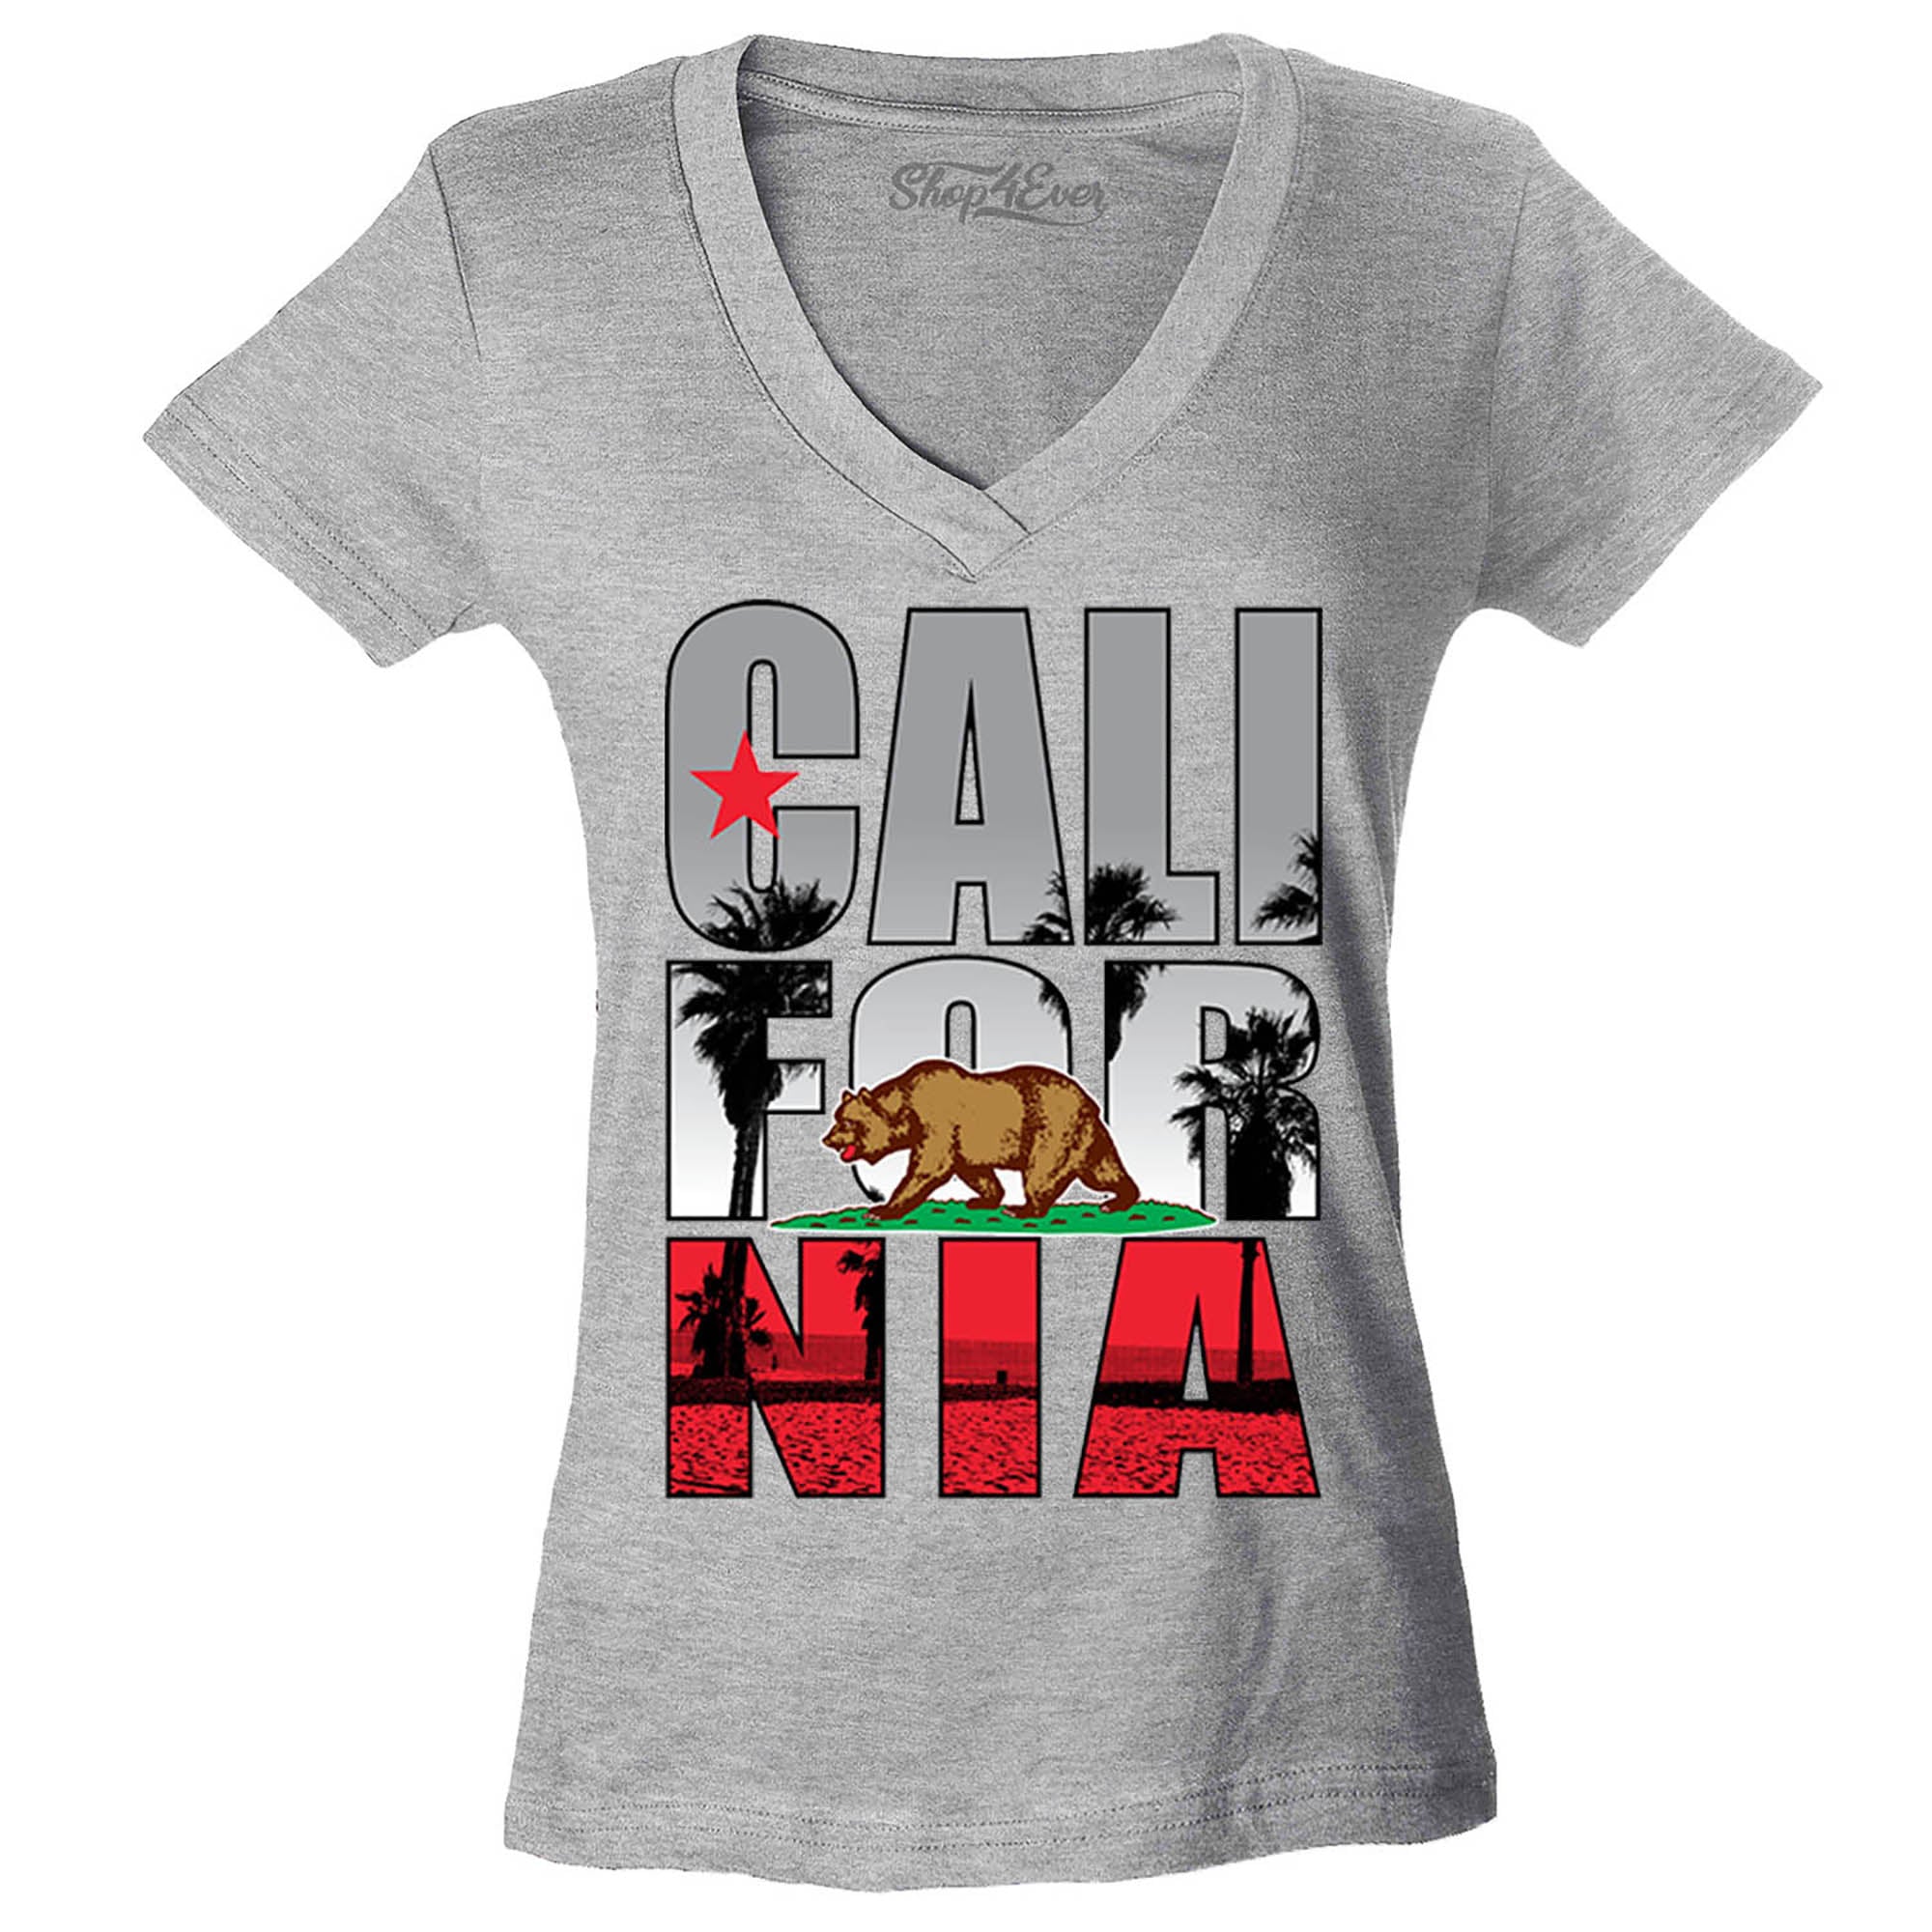 California Beach Palm Tree Women's V-Neck T-Shirt Flag Shirts Slim FIT